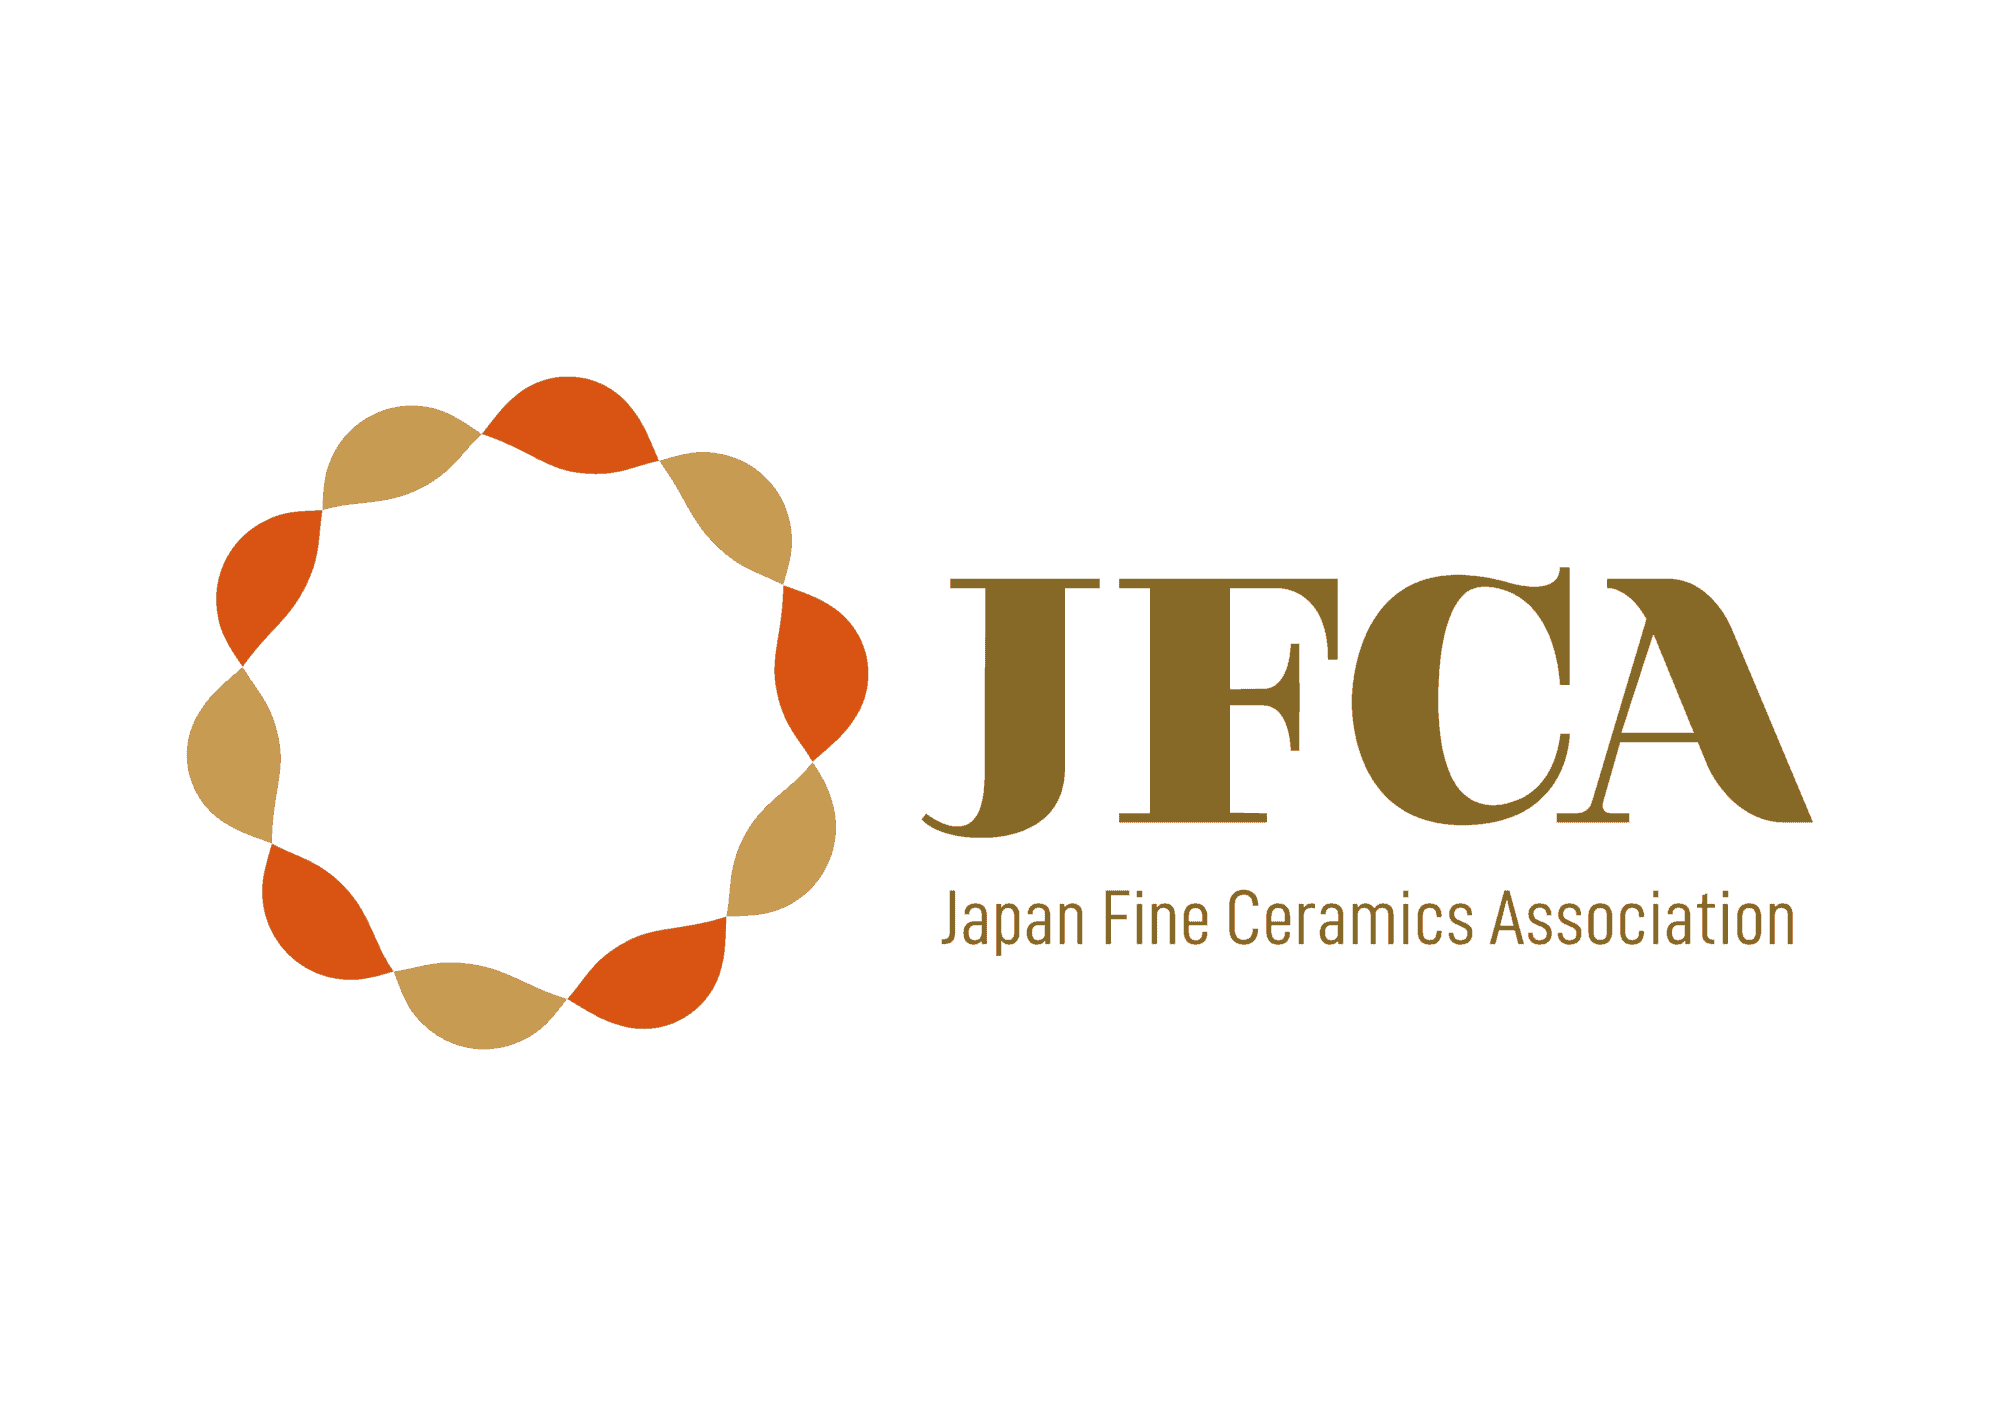 JFCA logo Horizontal with tranparent background